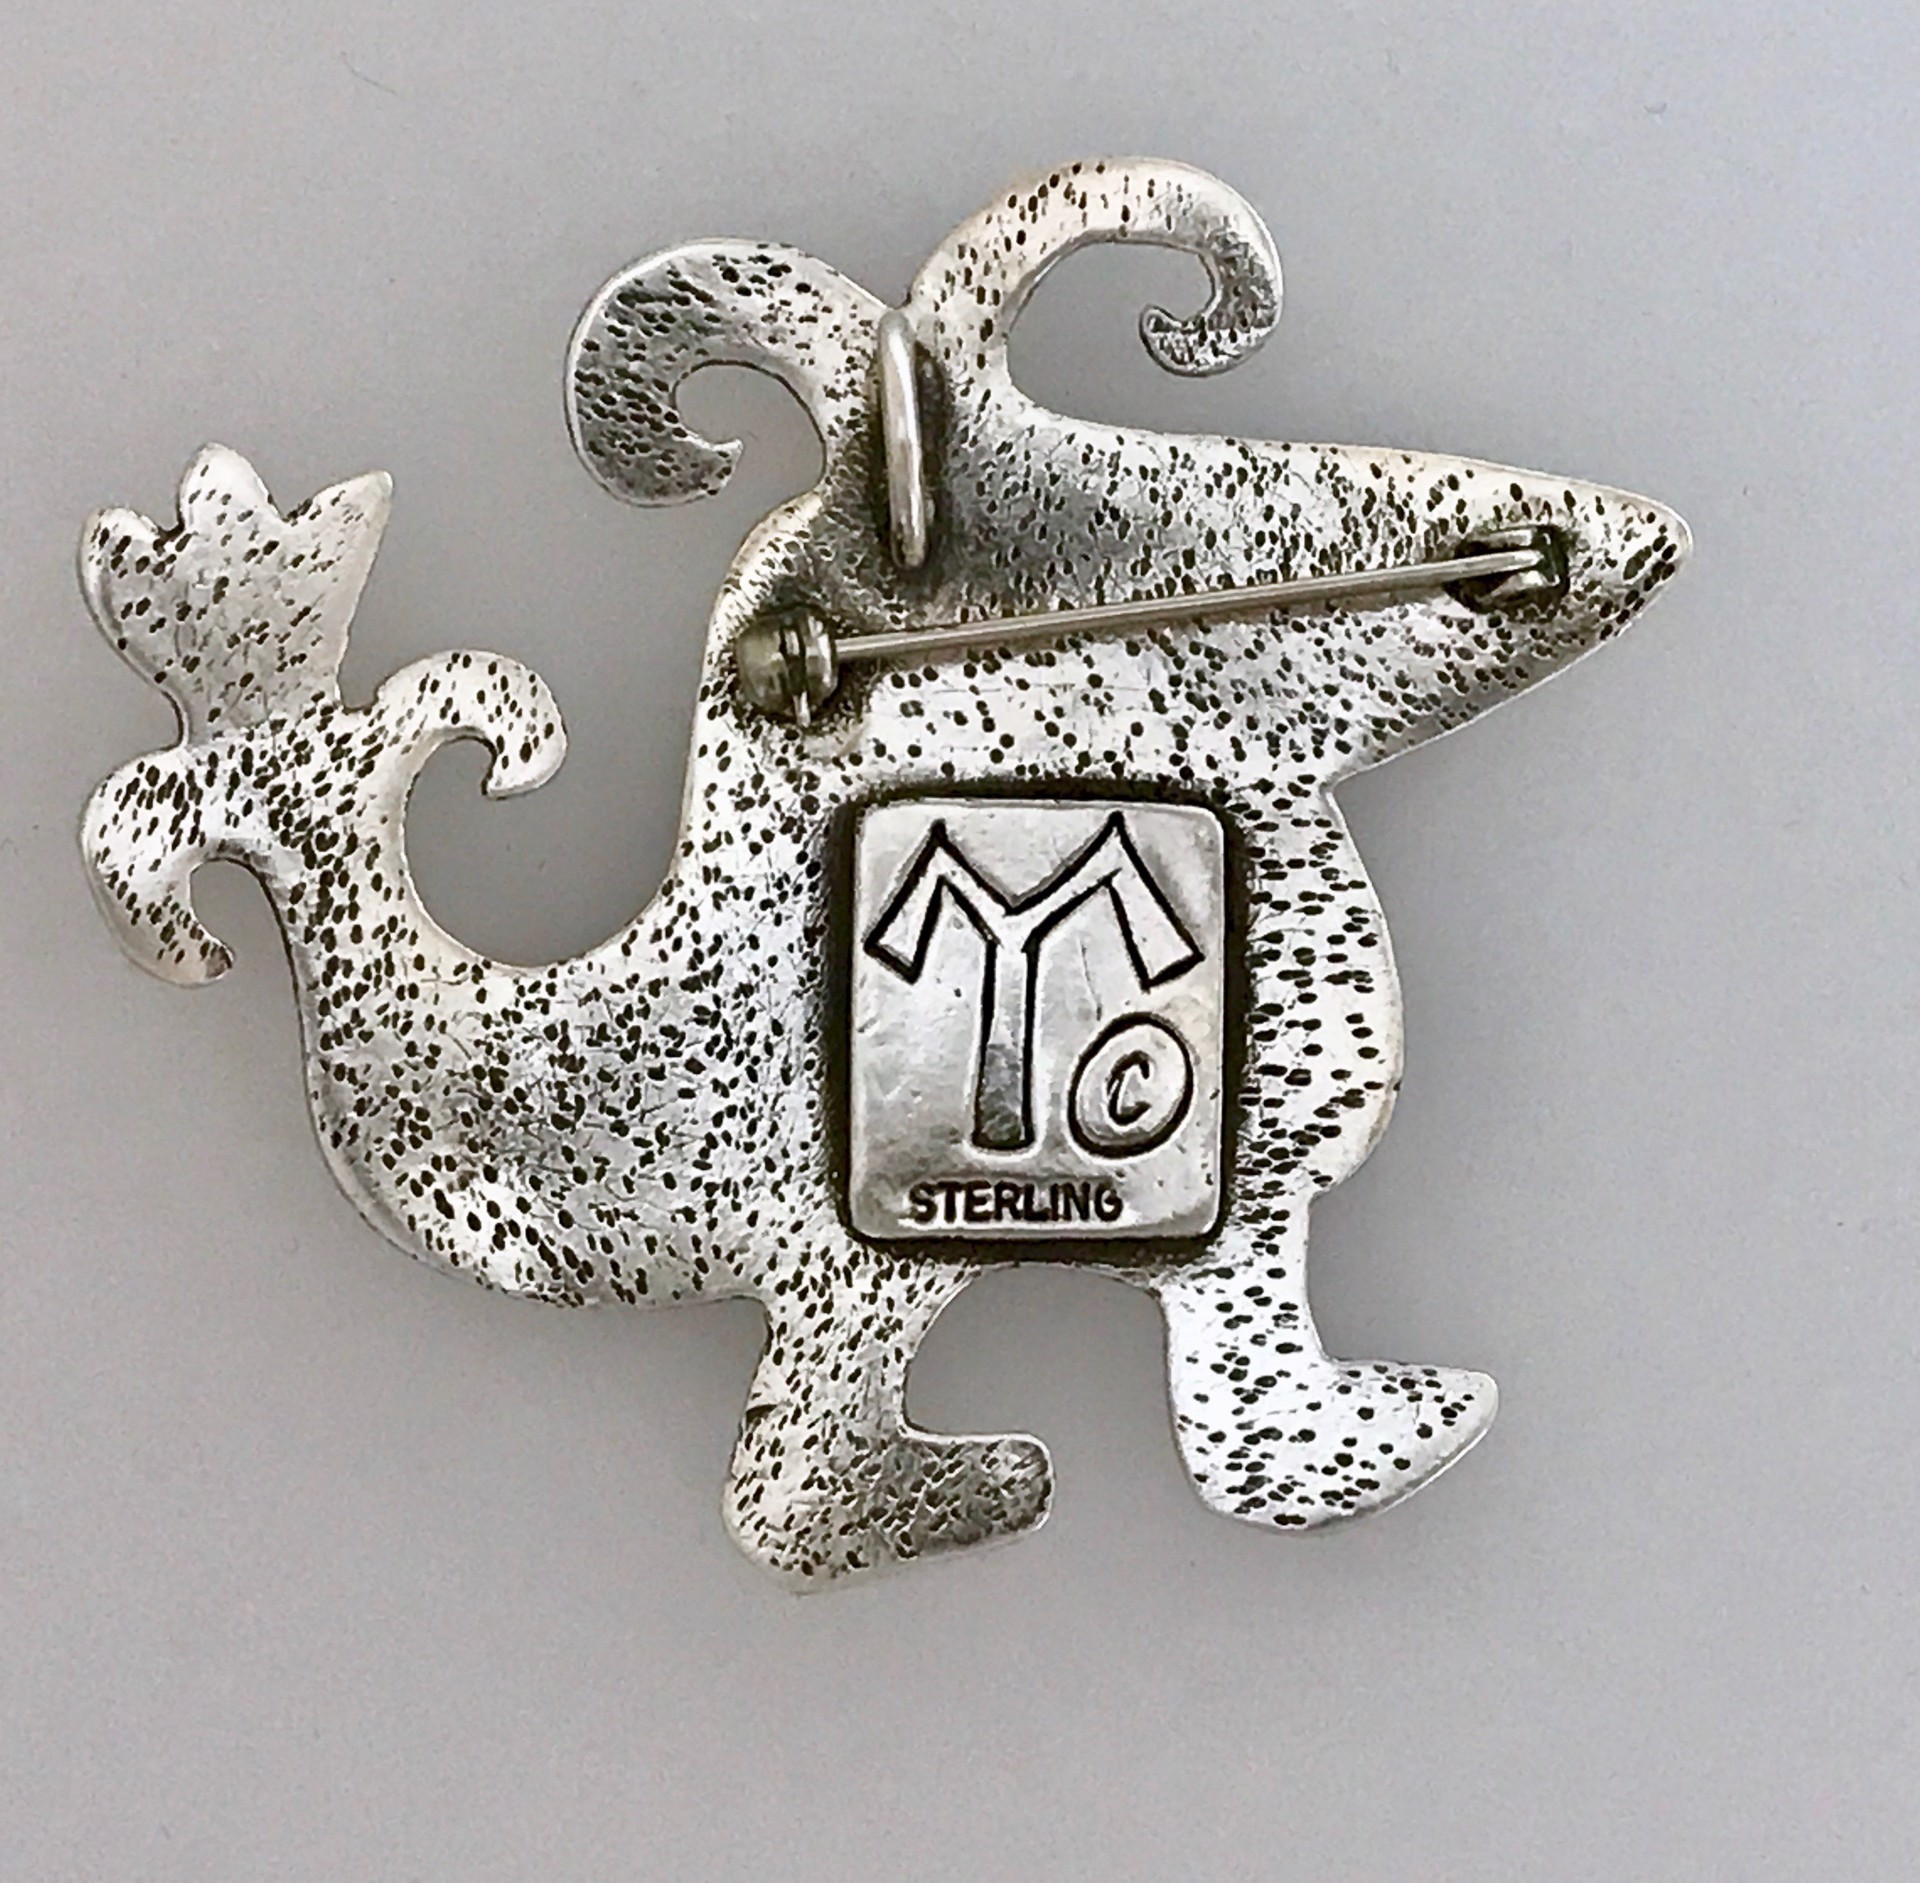 Little Jack pendant by Melanie Yazzie